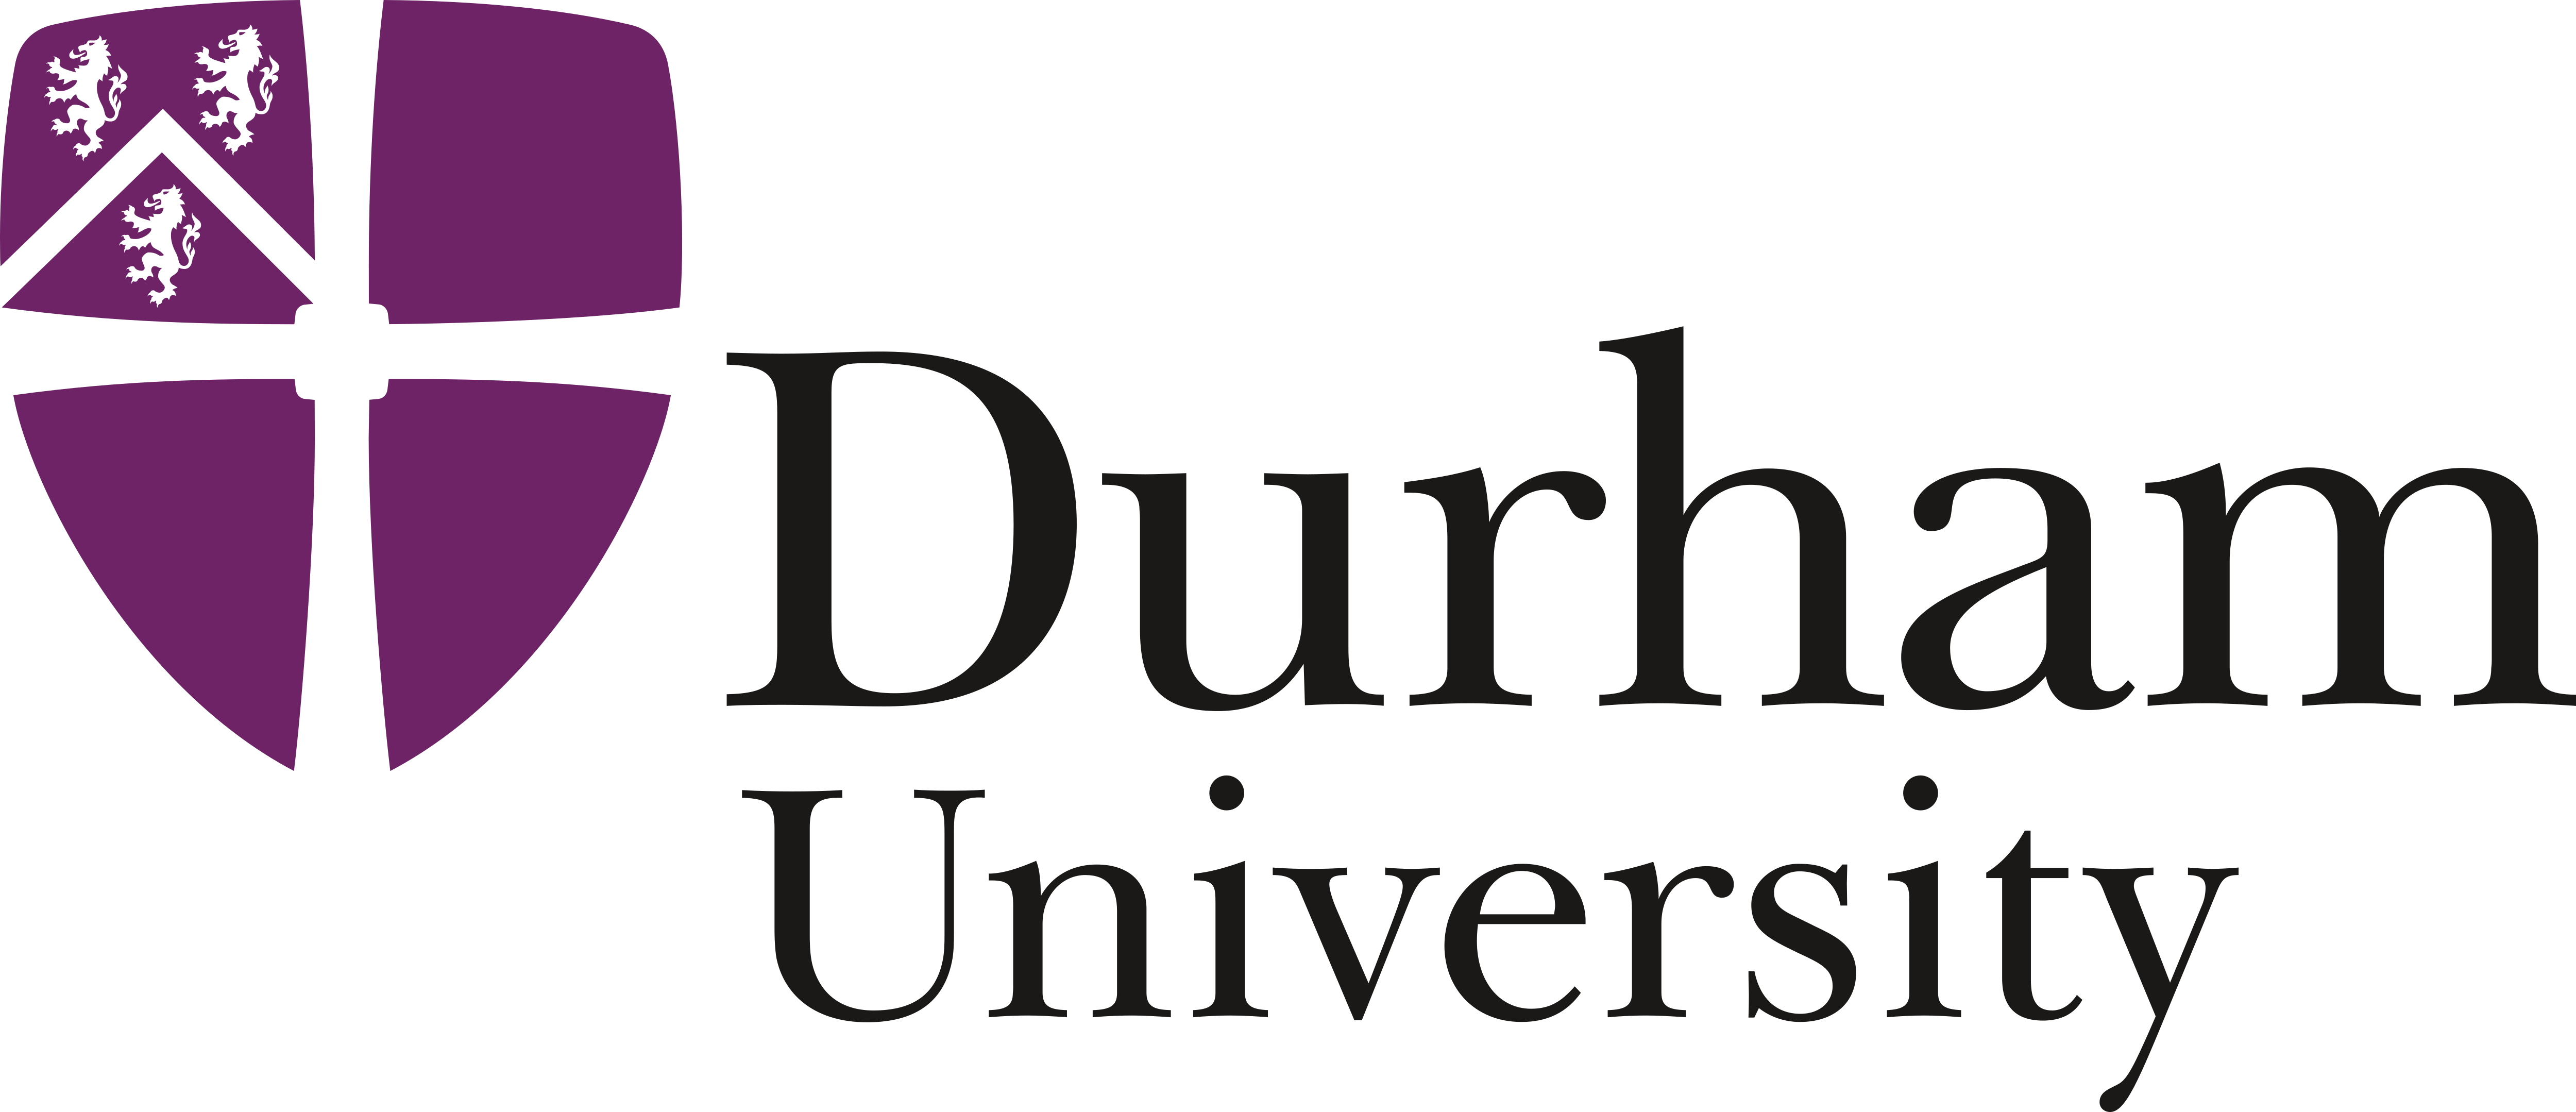 Университет Дарэма логотип.png